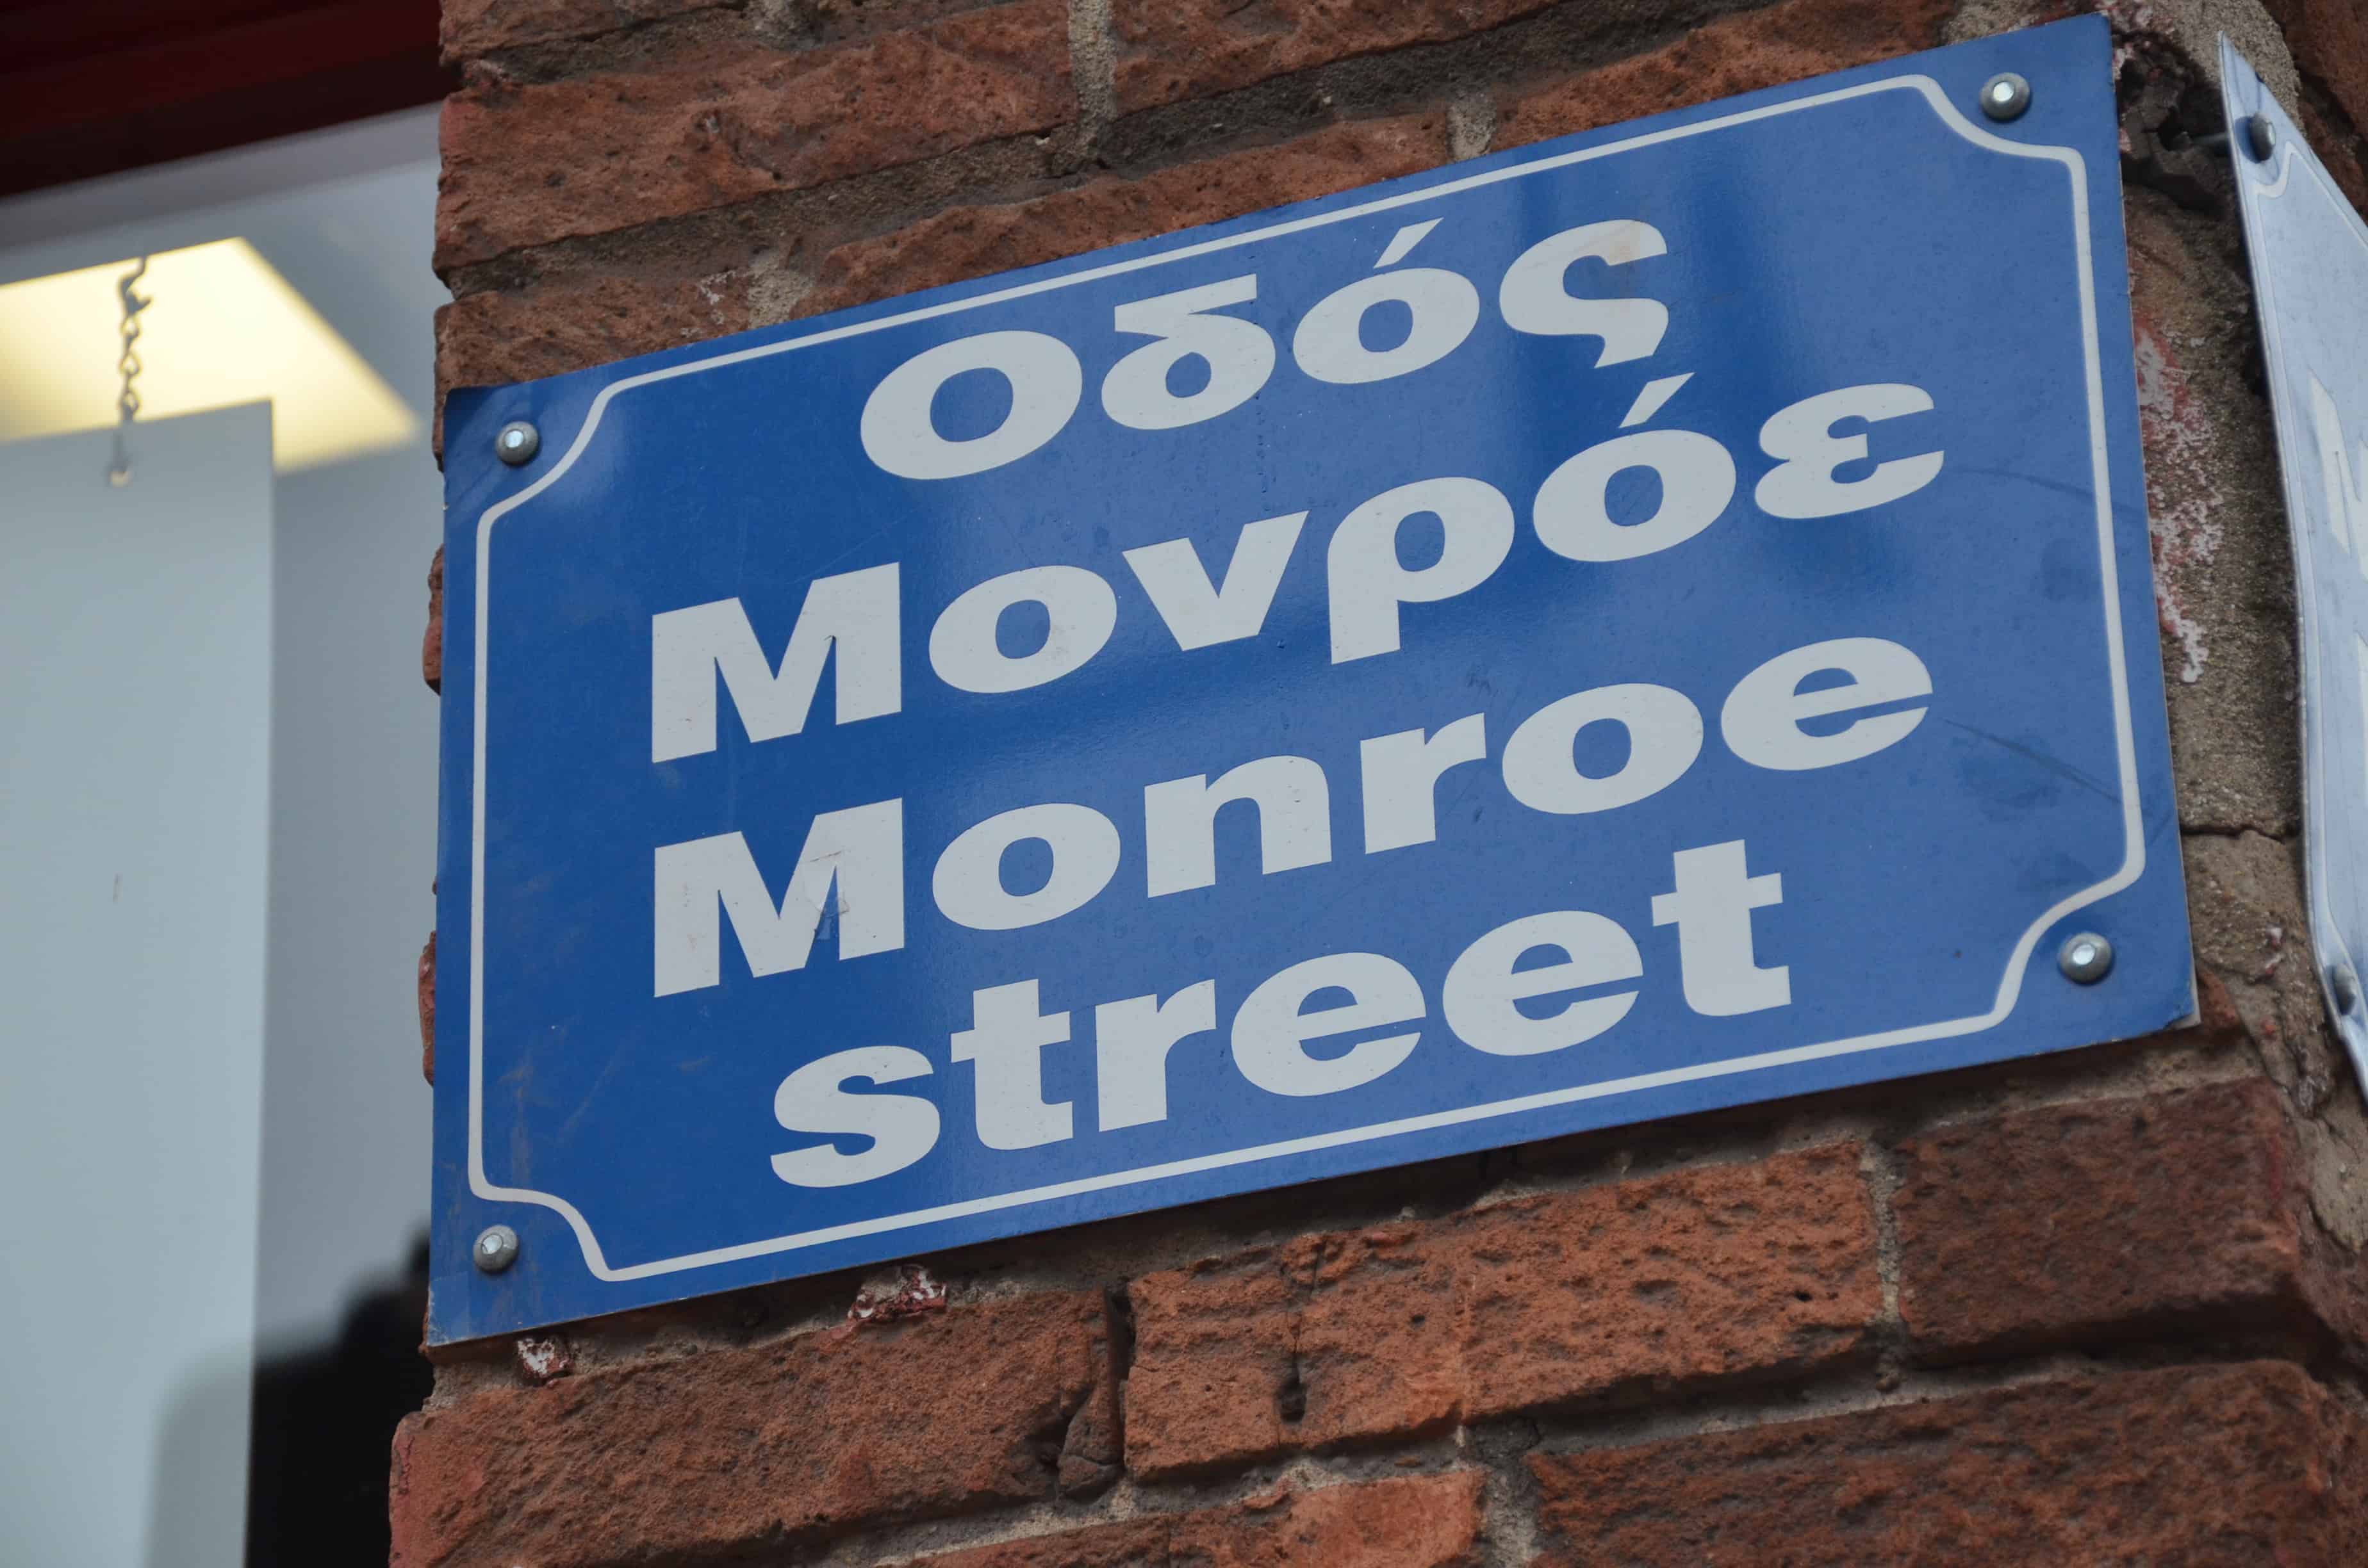 Monroe Street sign in Greek and English in Greektown, Detroit, Michigan